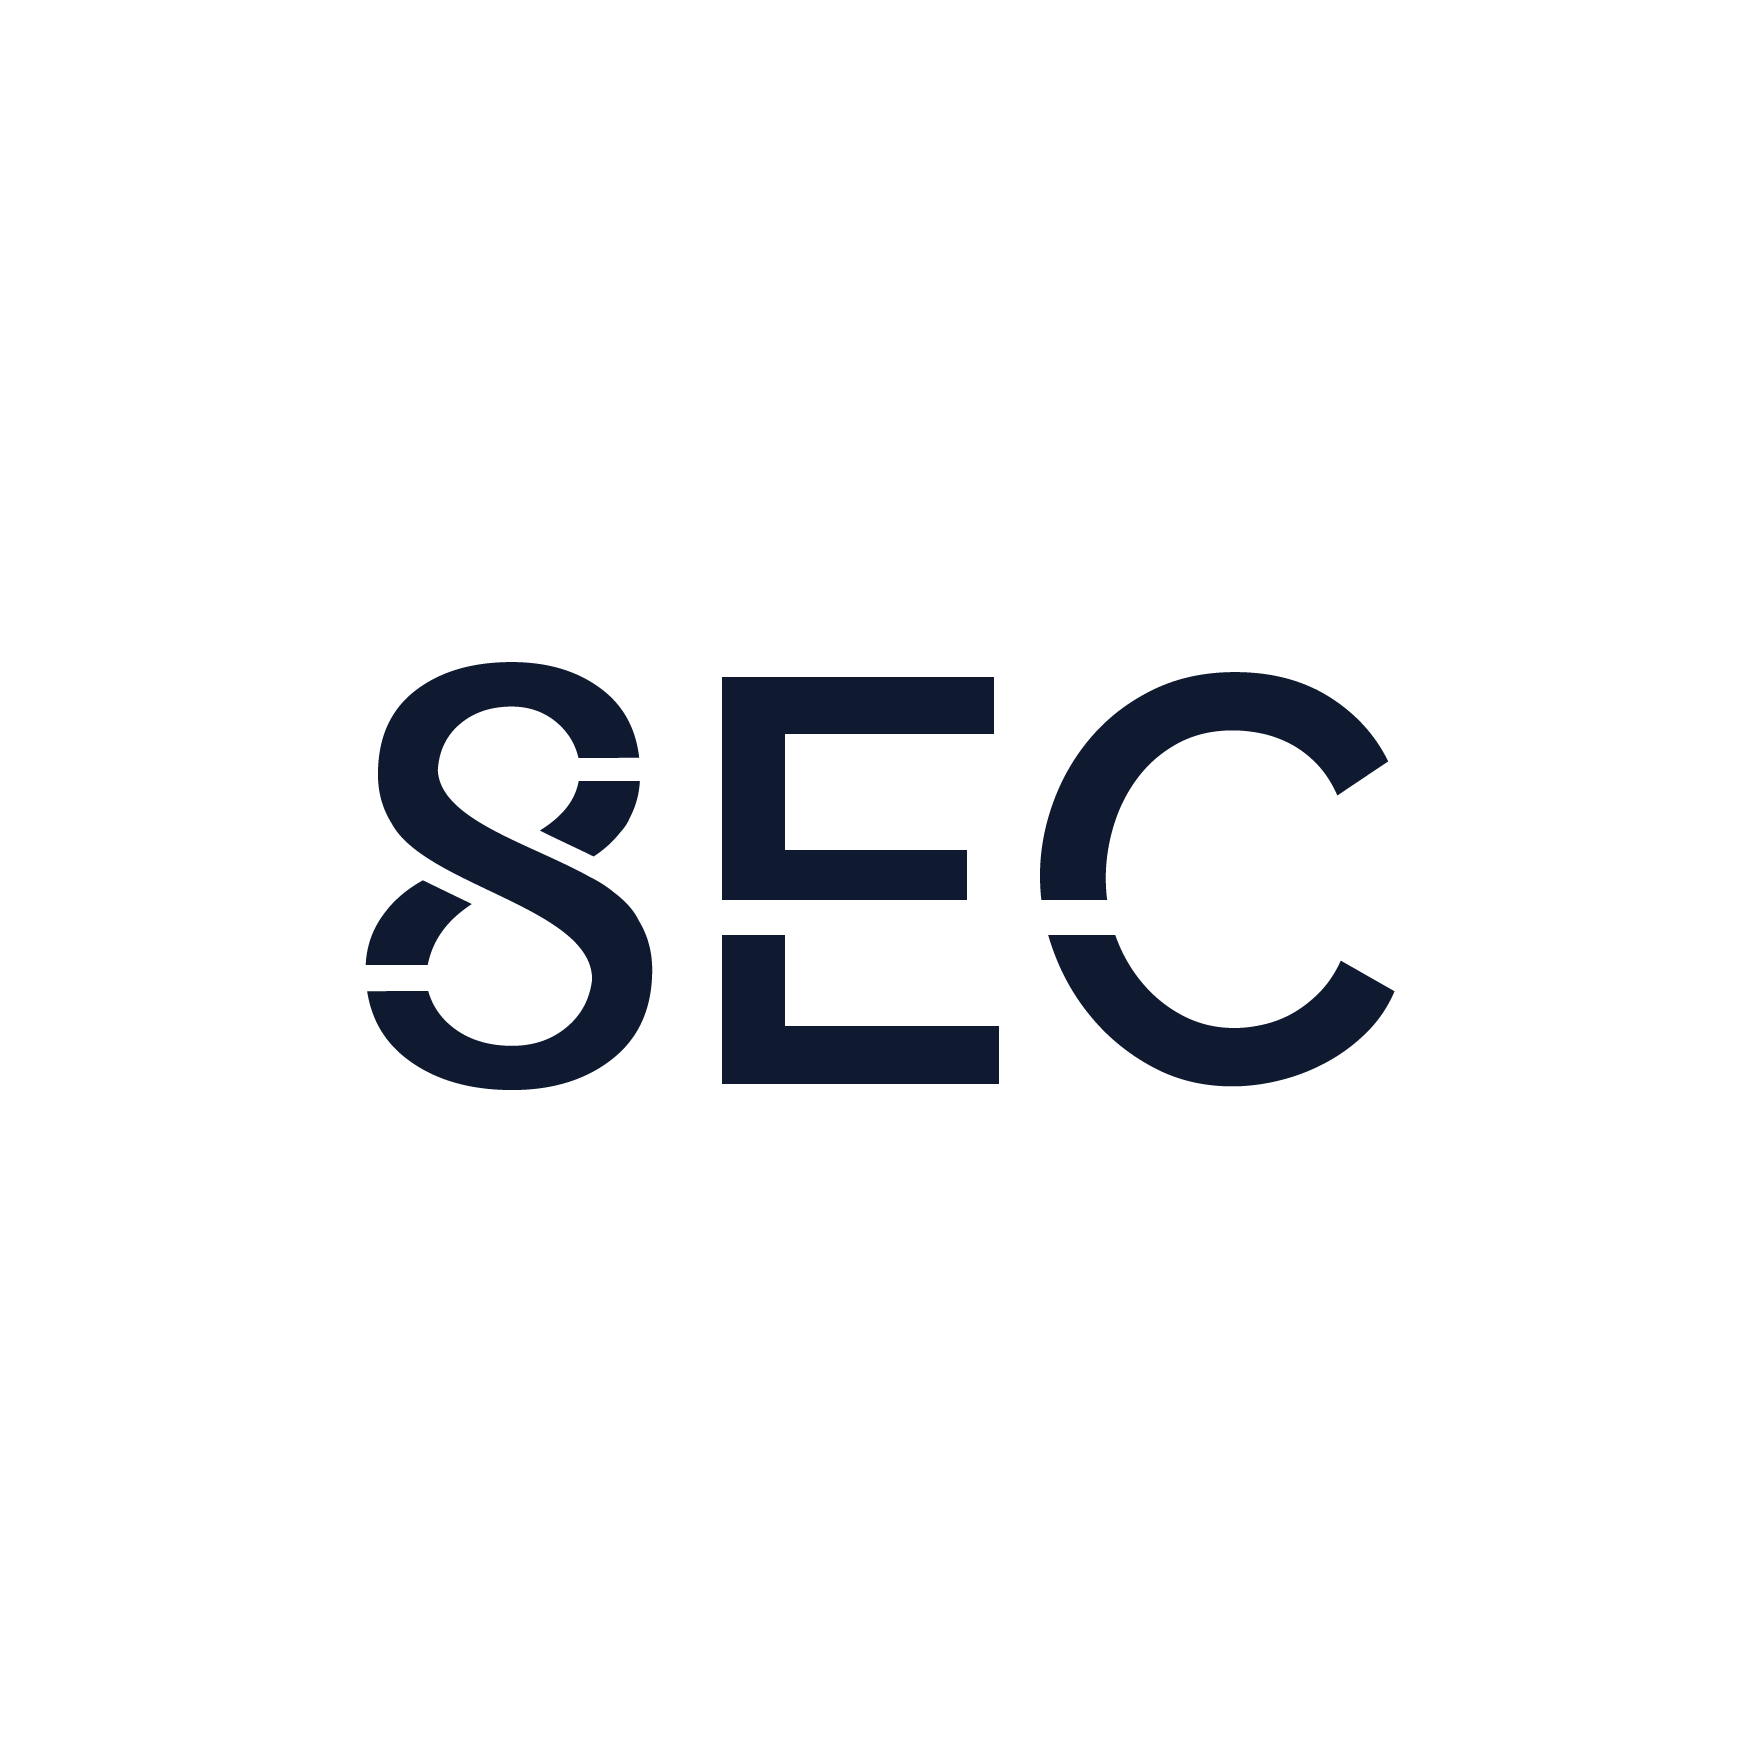 8Sec logo